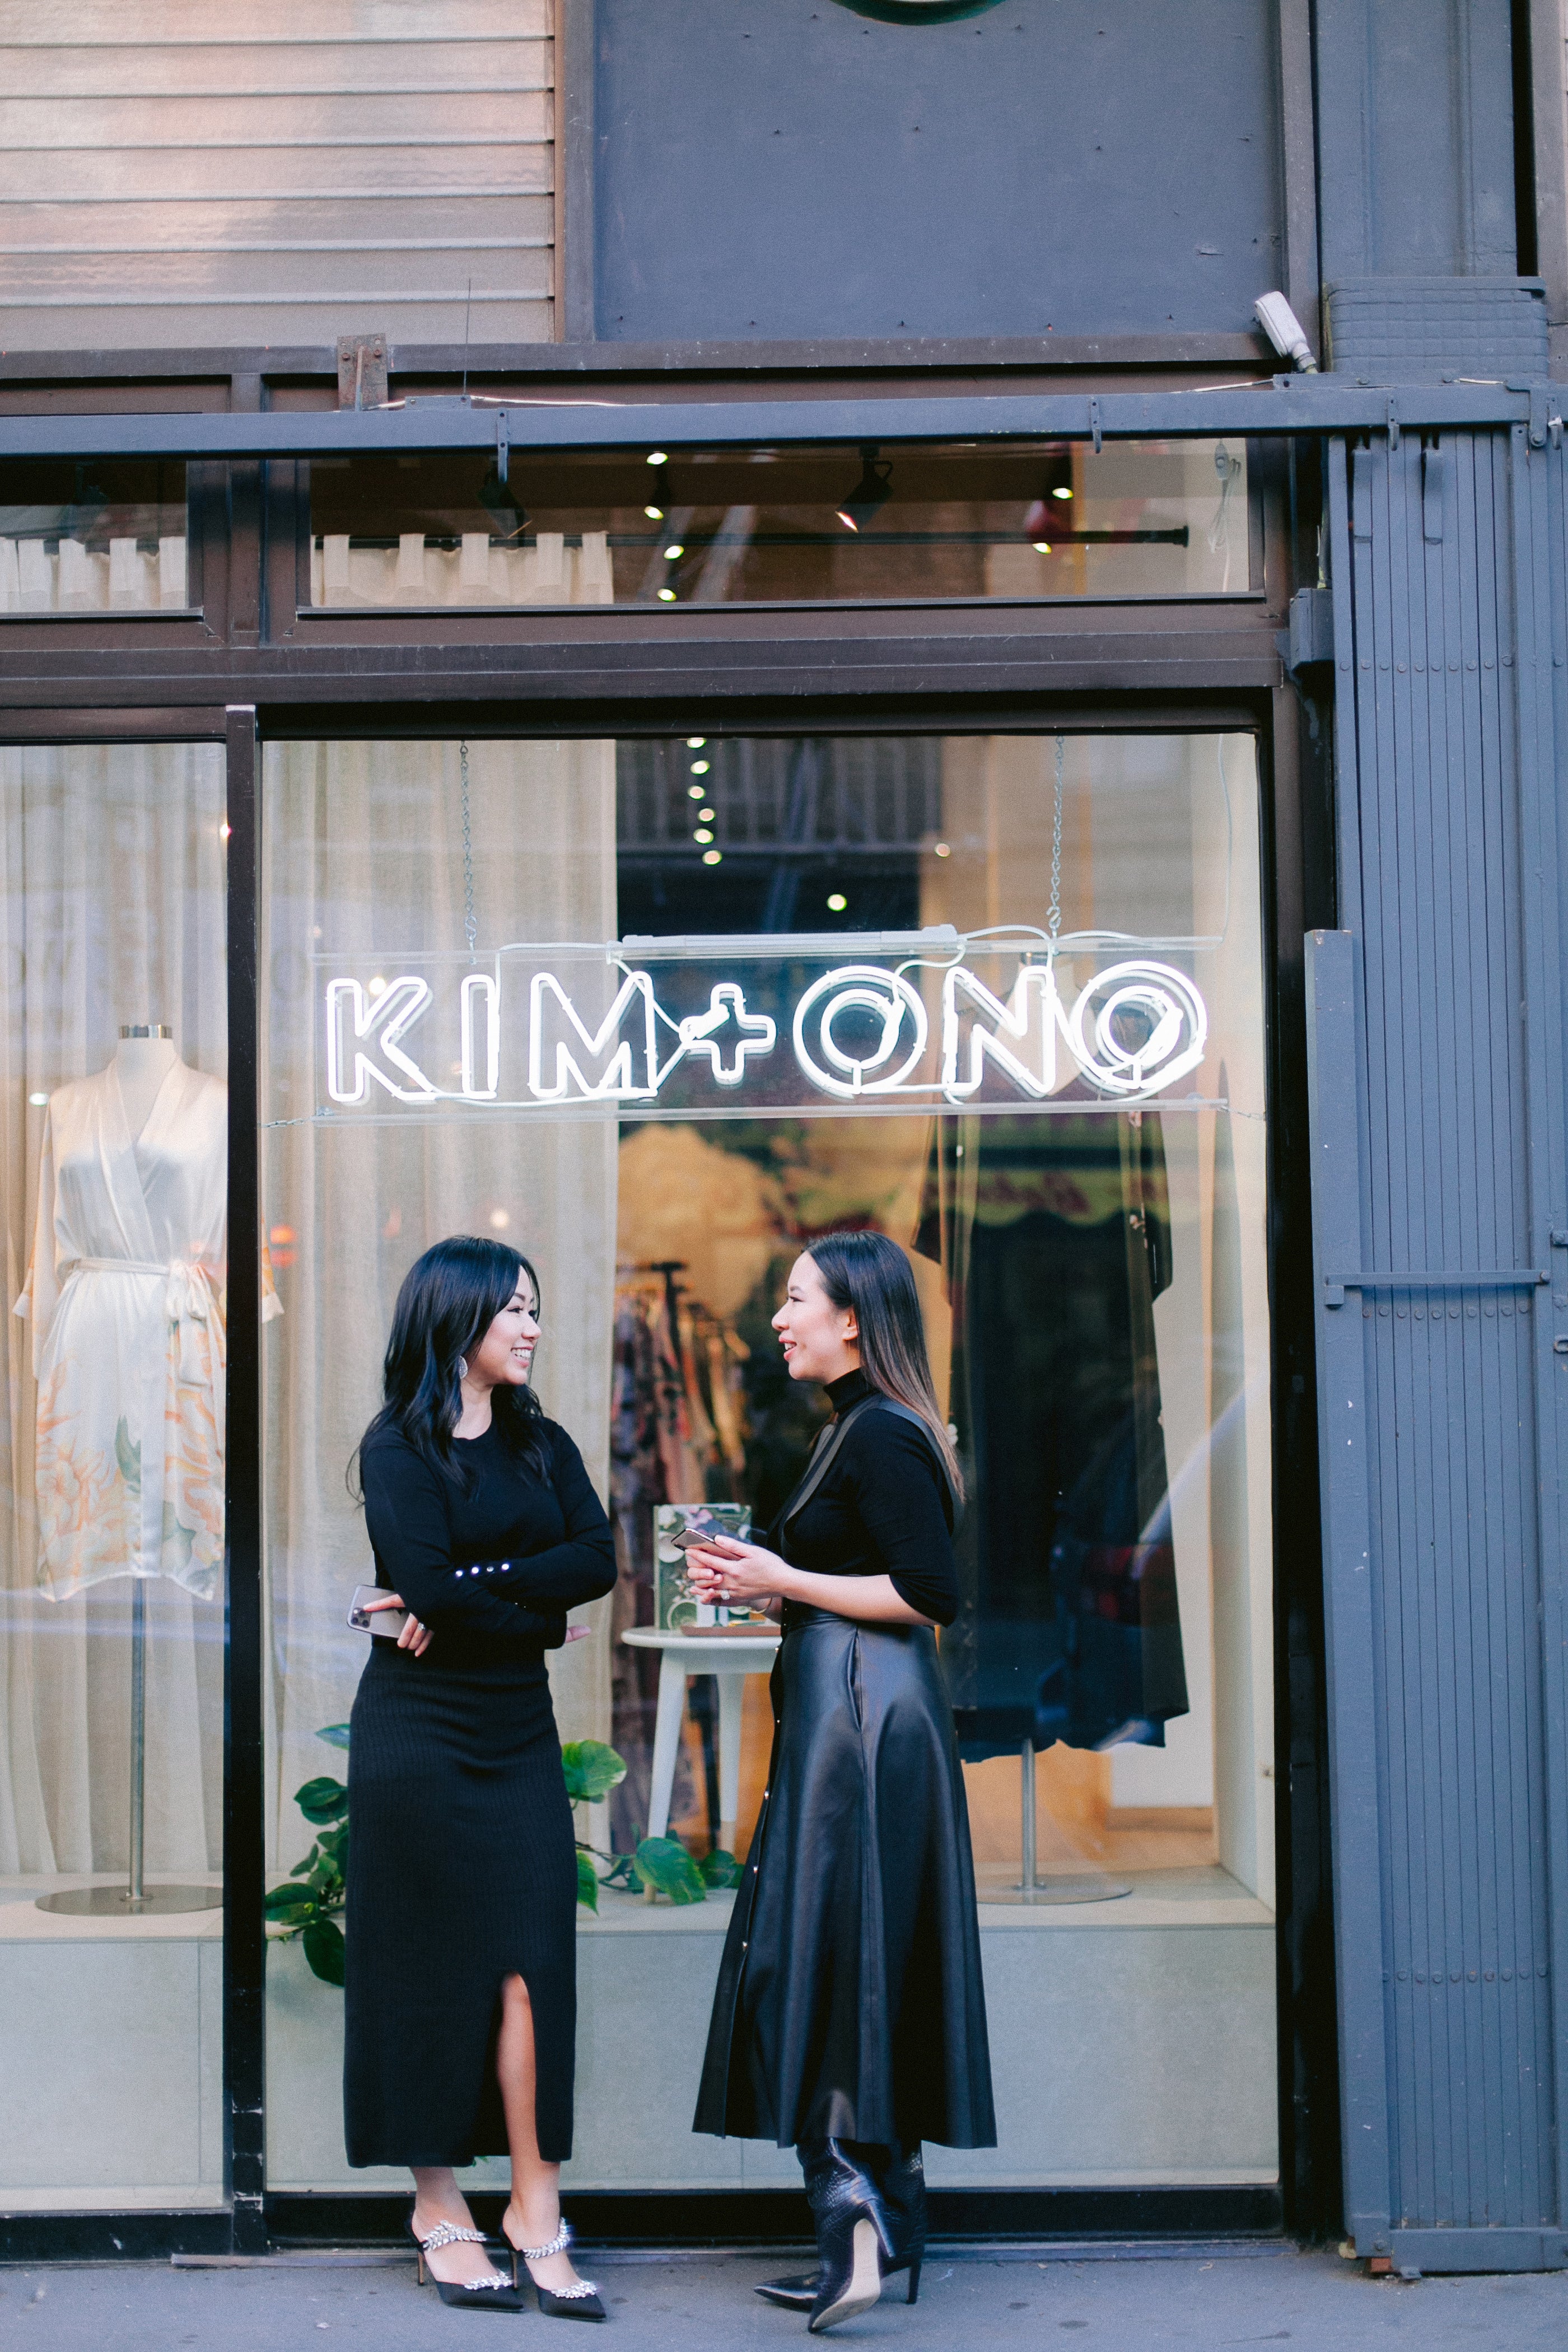 KIM+ONO Kimono Store